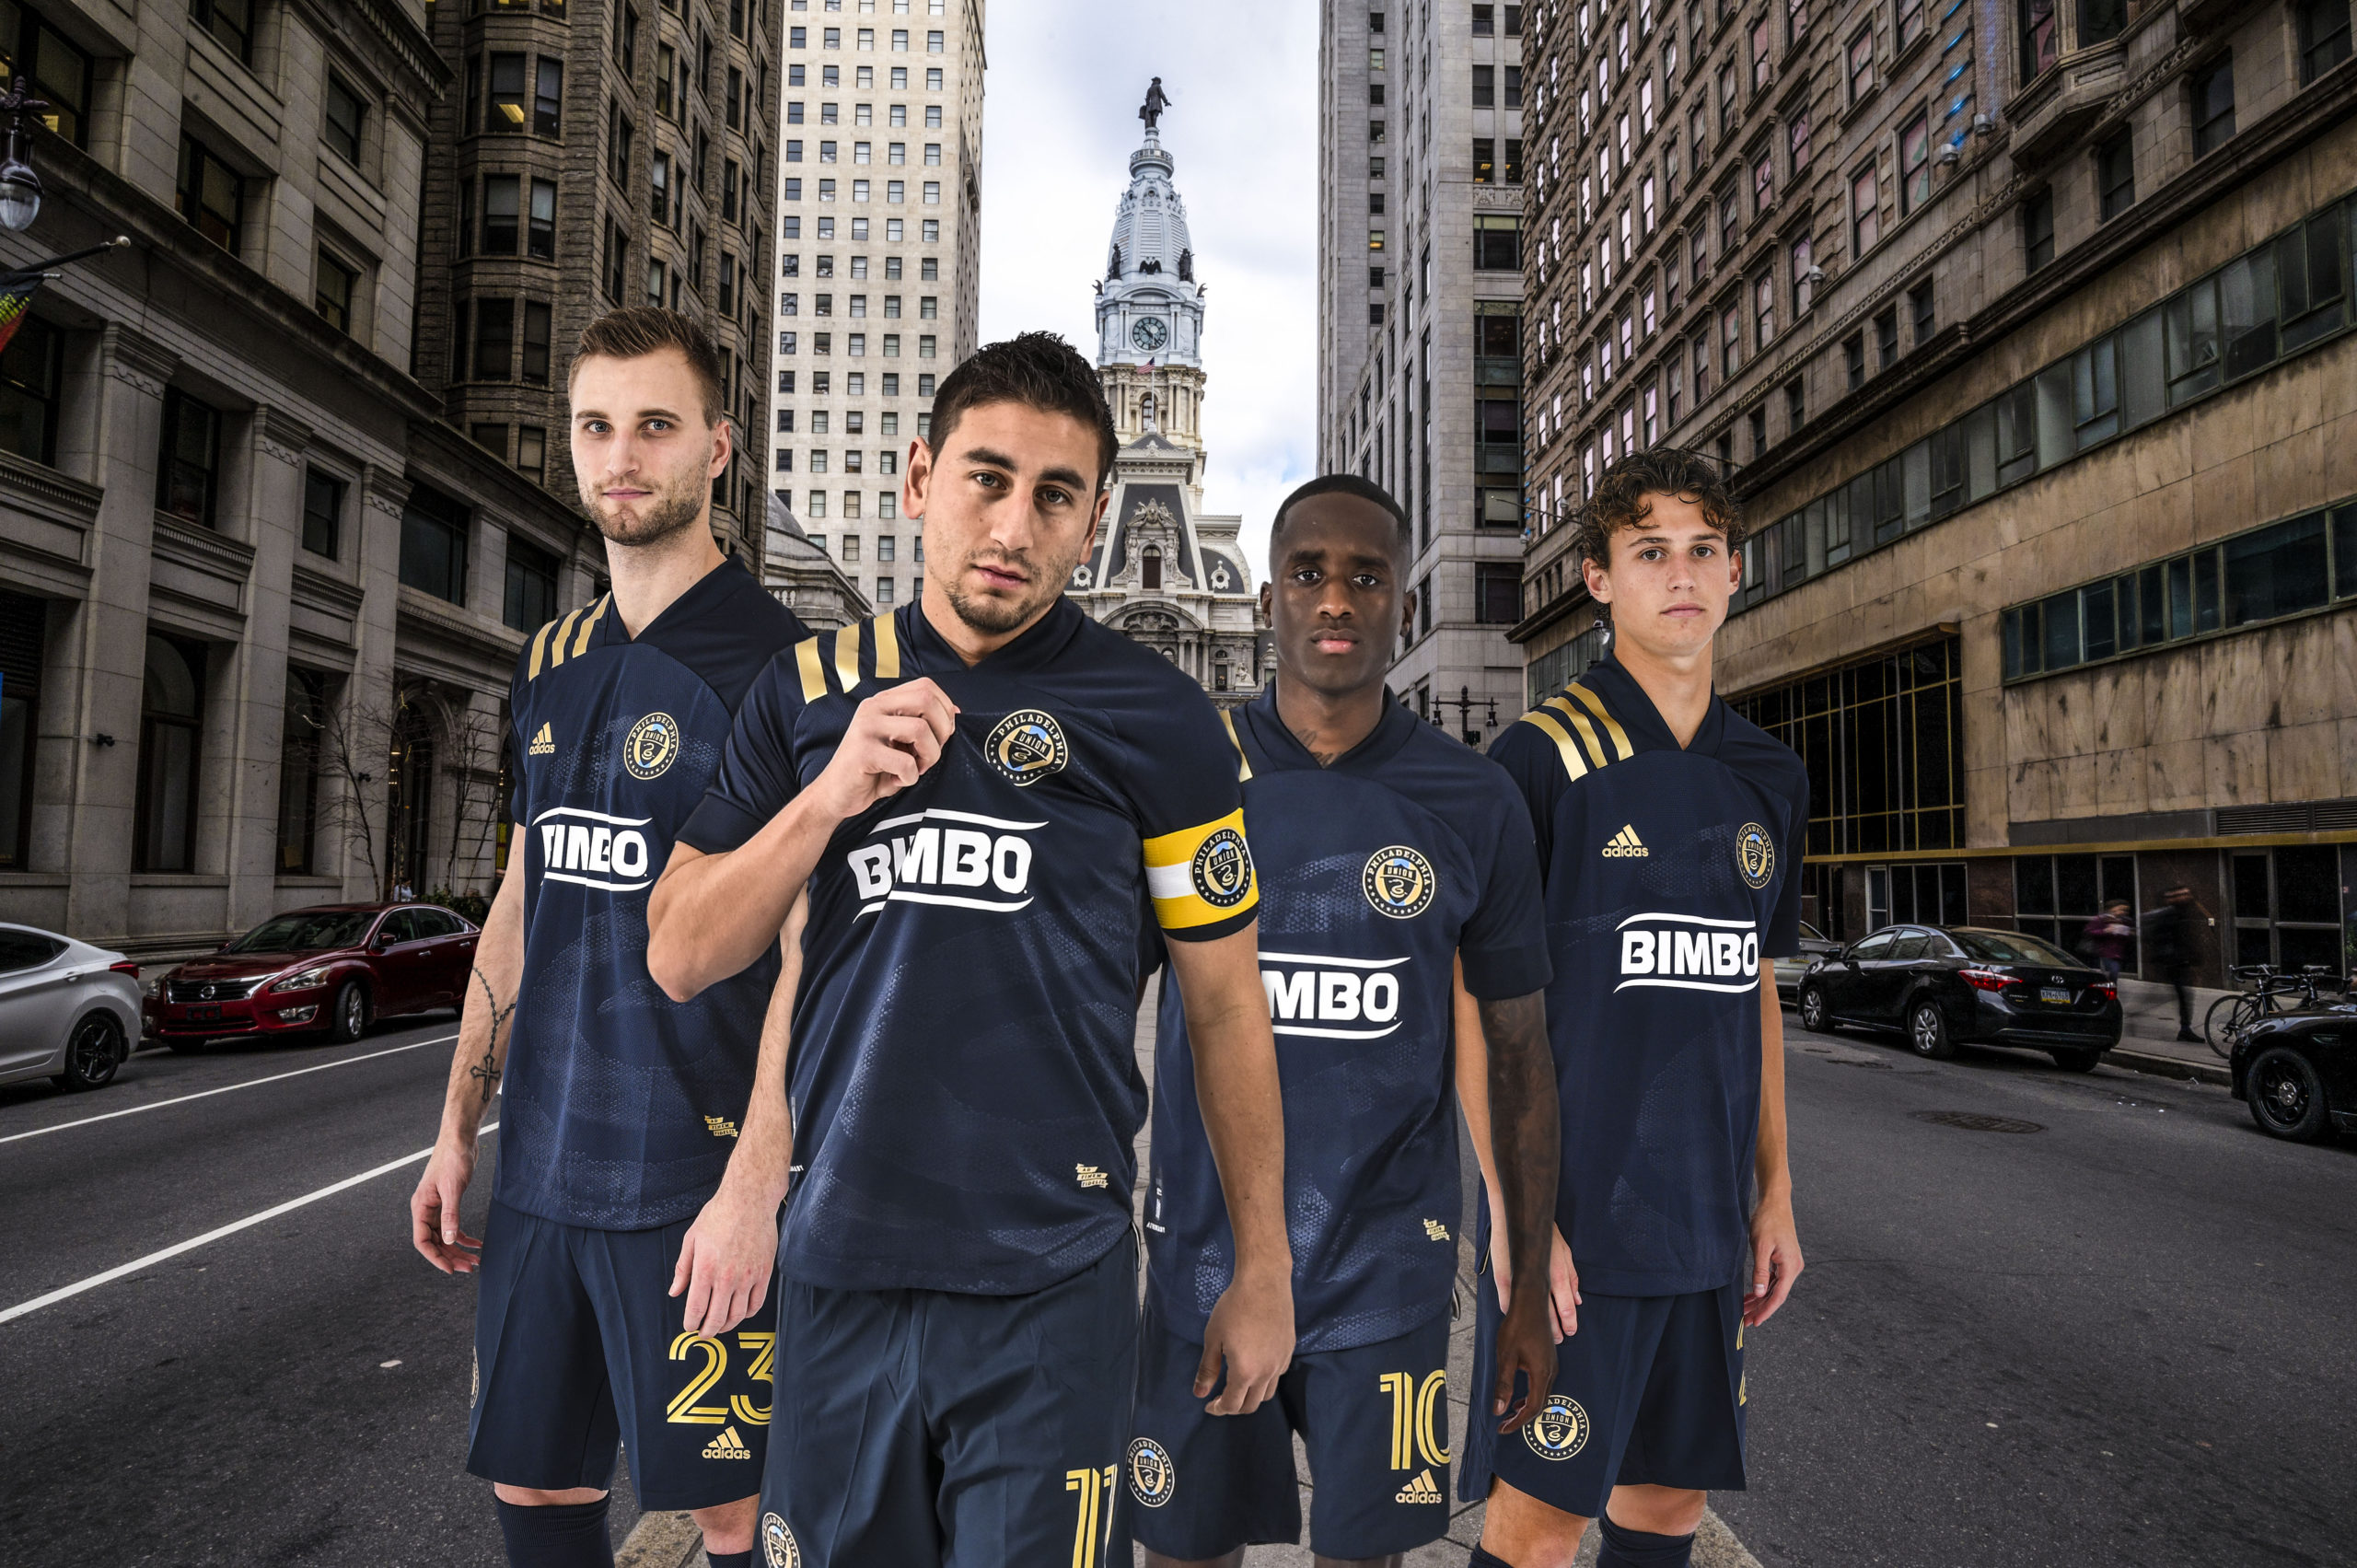 Bimbo, Philadelphia Union renew and expand jersey sponsorship deal